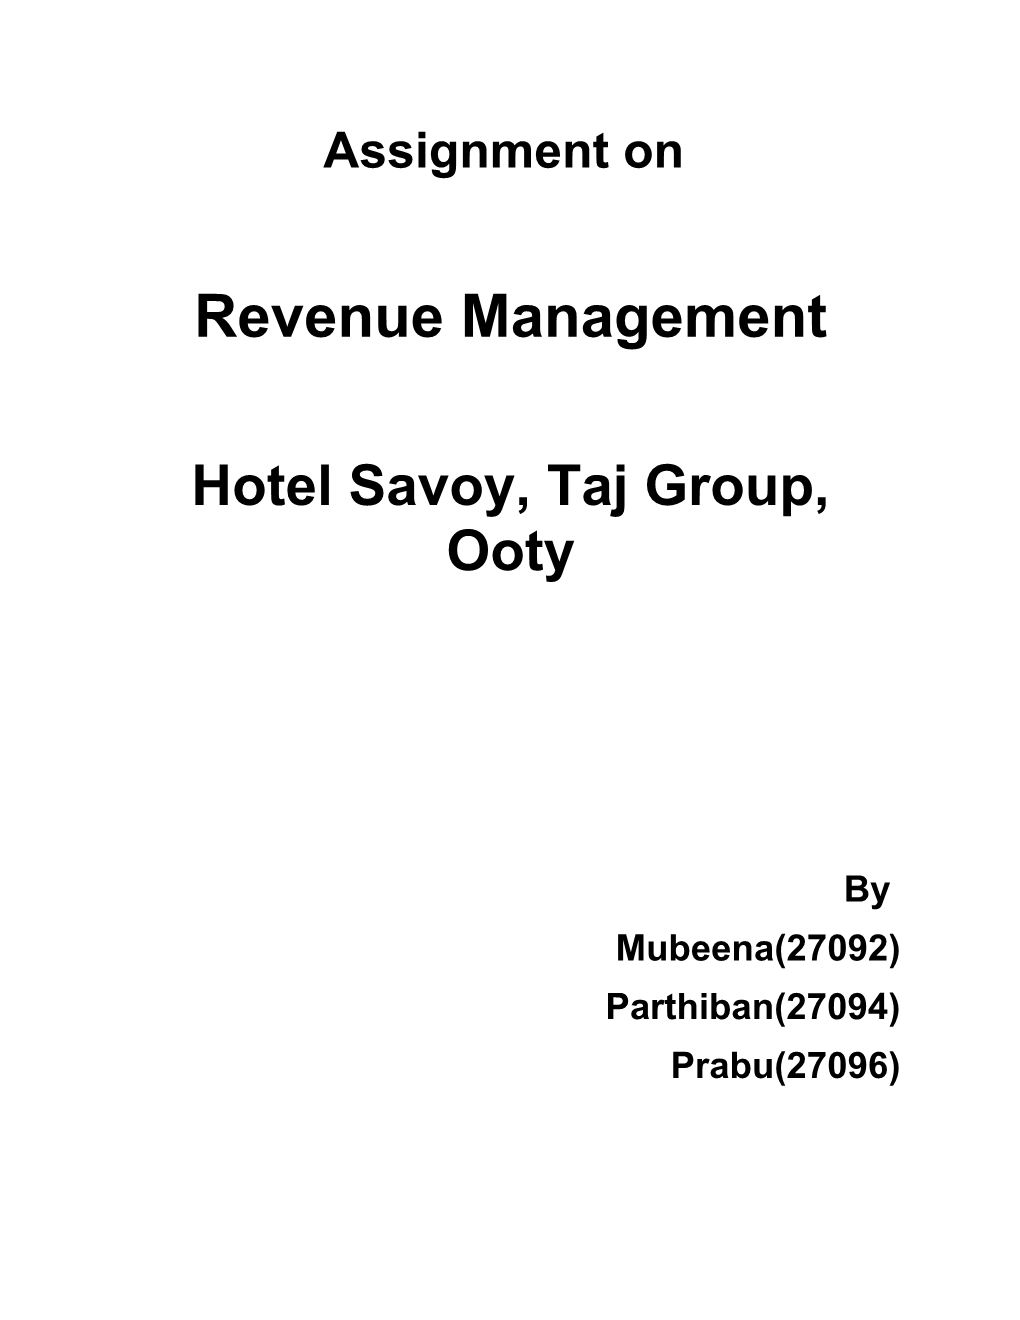 Hotel Savoy, Taj Group, Ooty